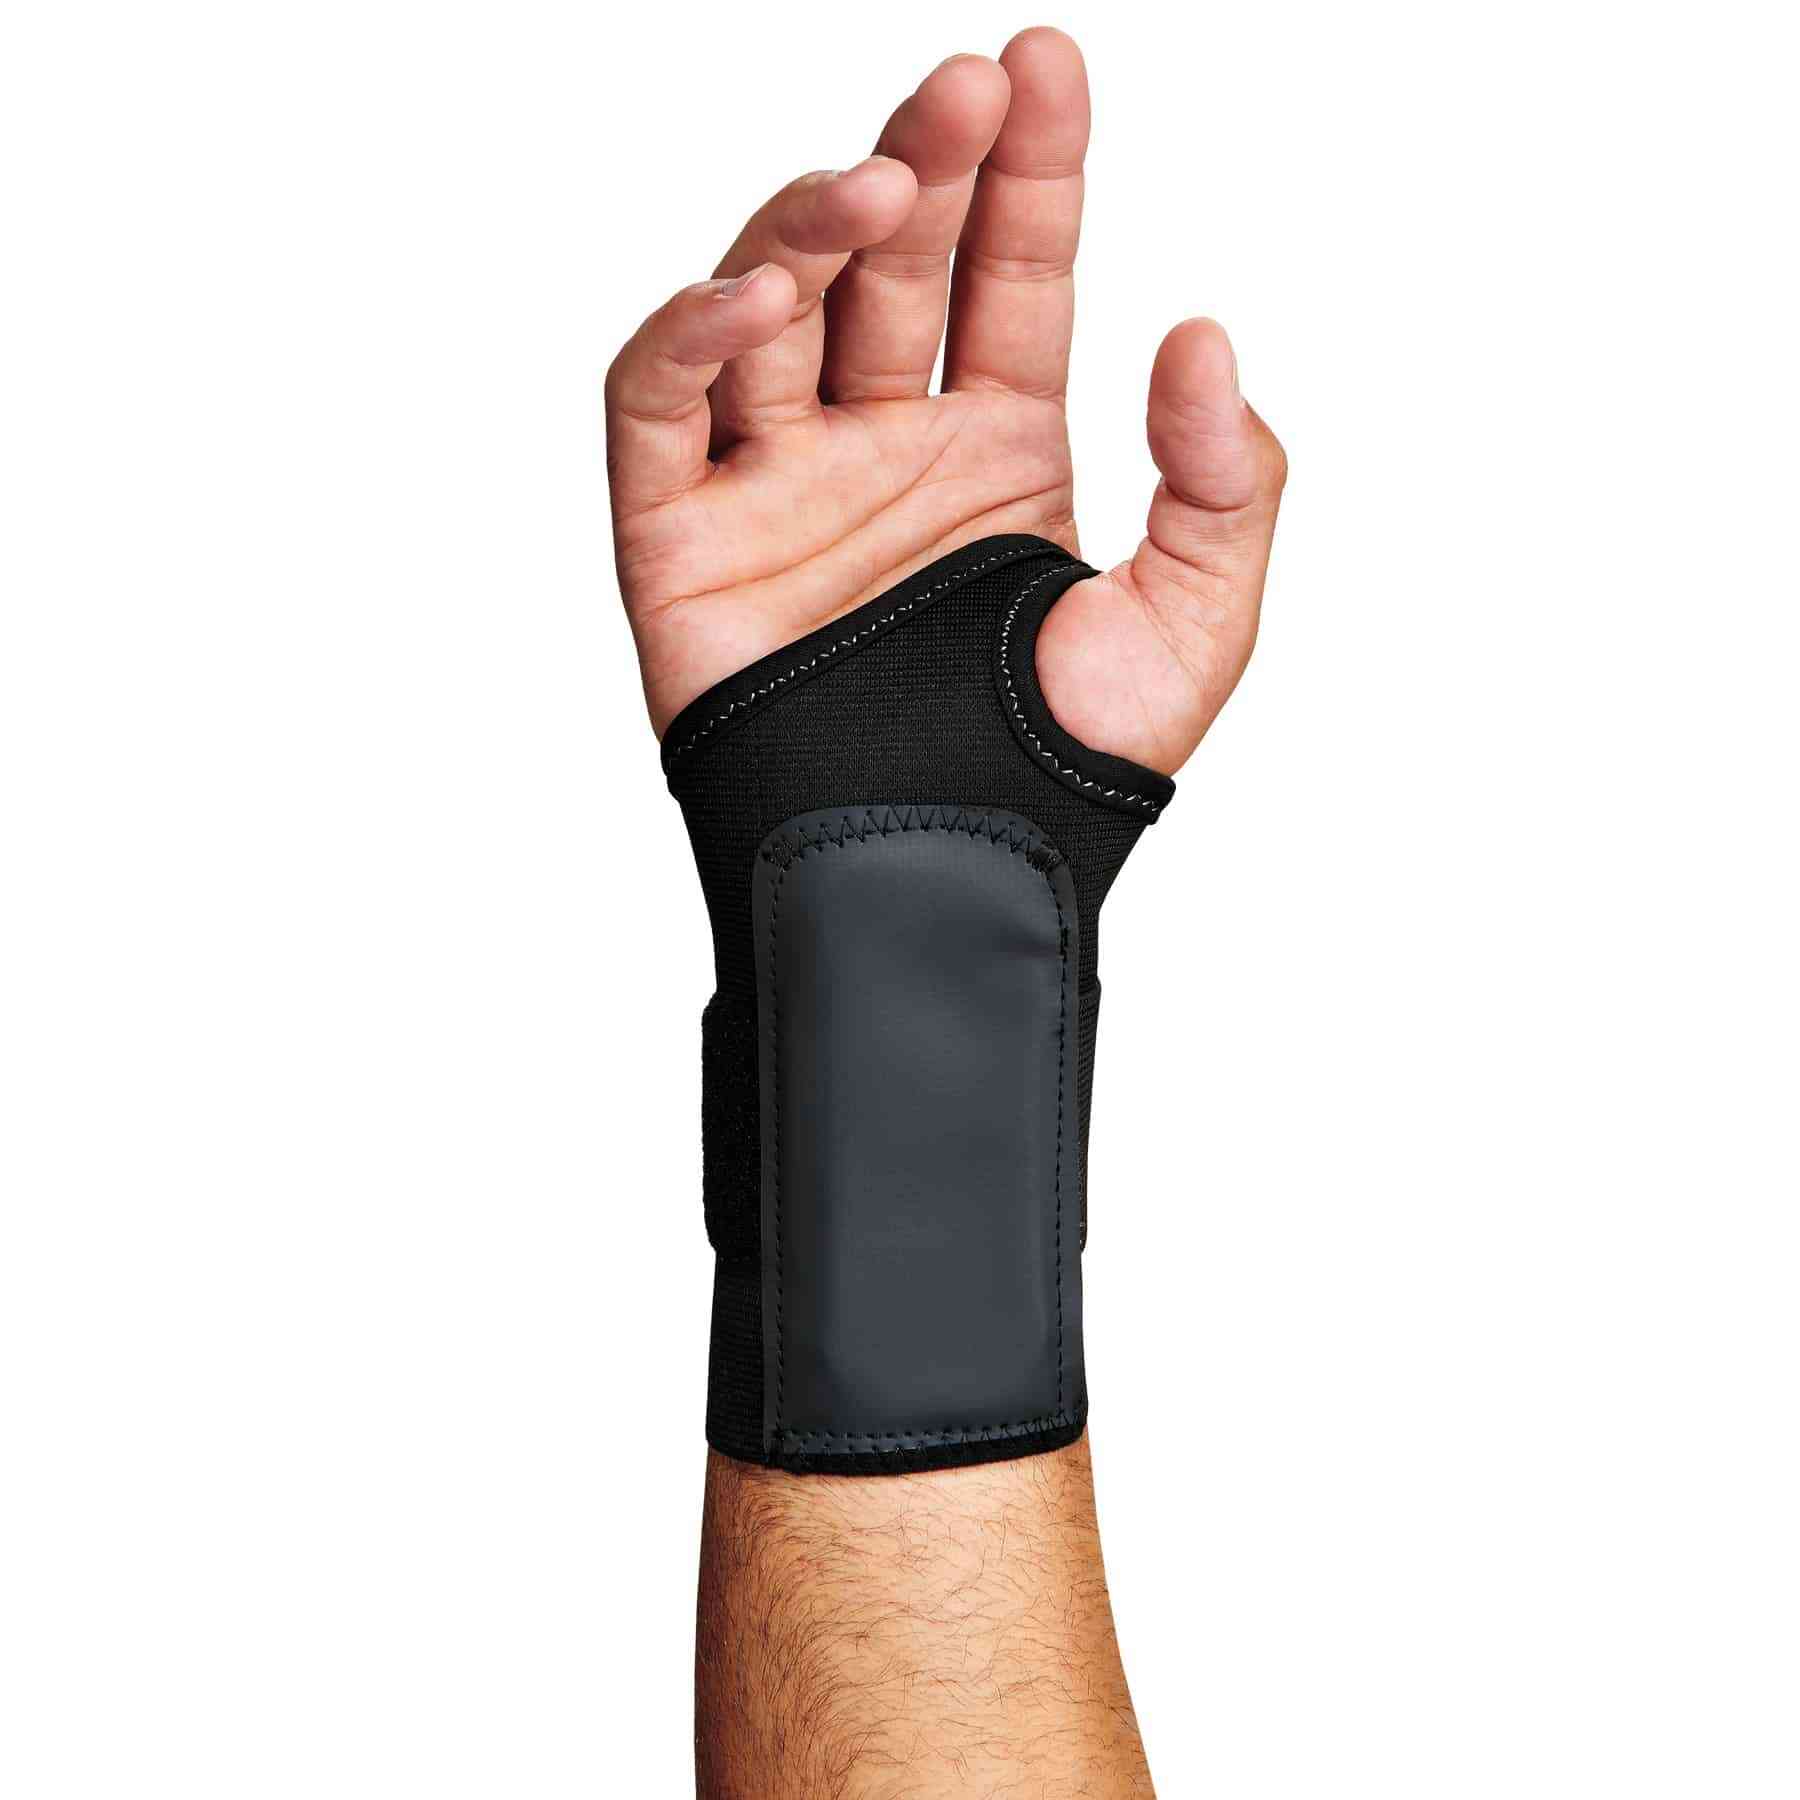 Single Strap Wrist Support - Wrist Supports